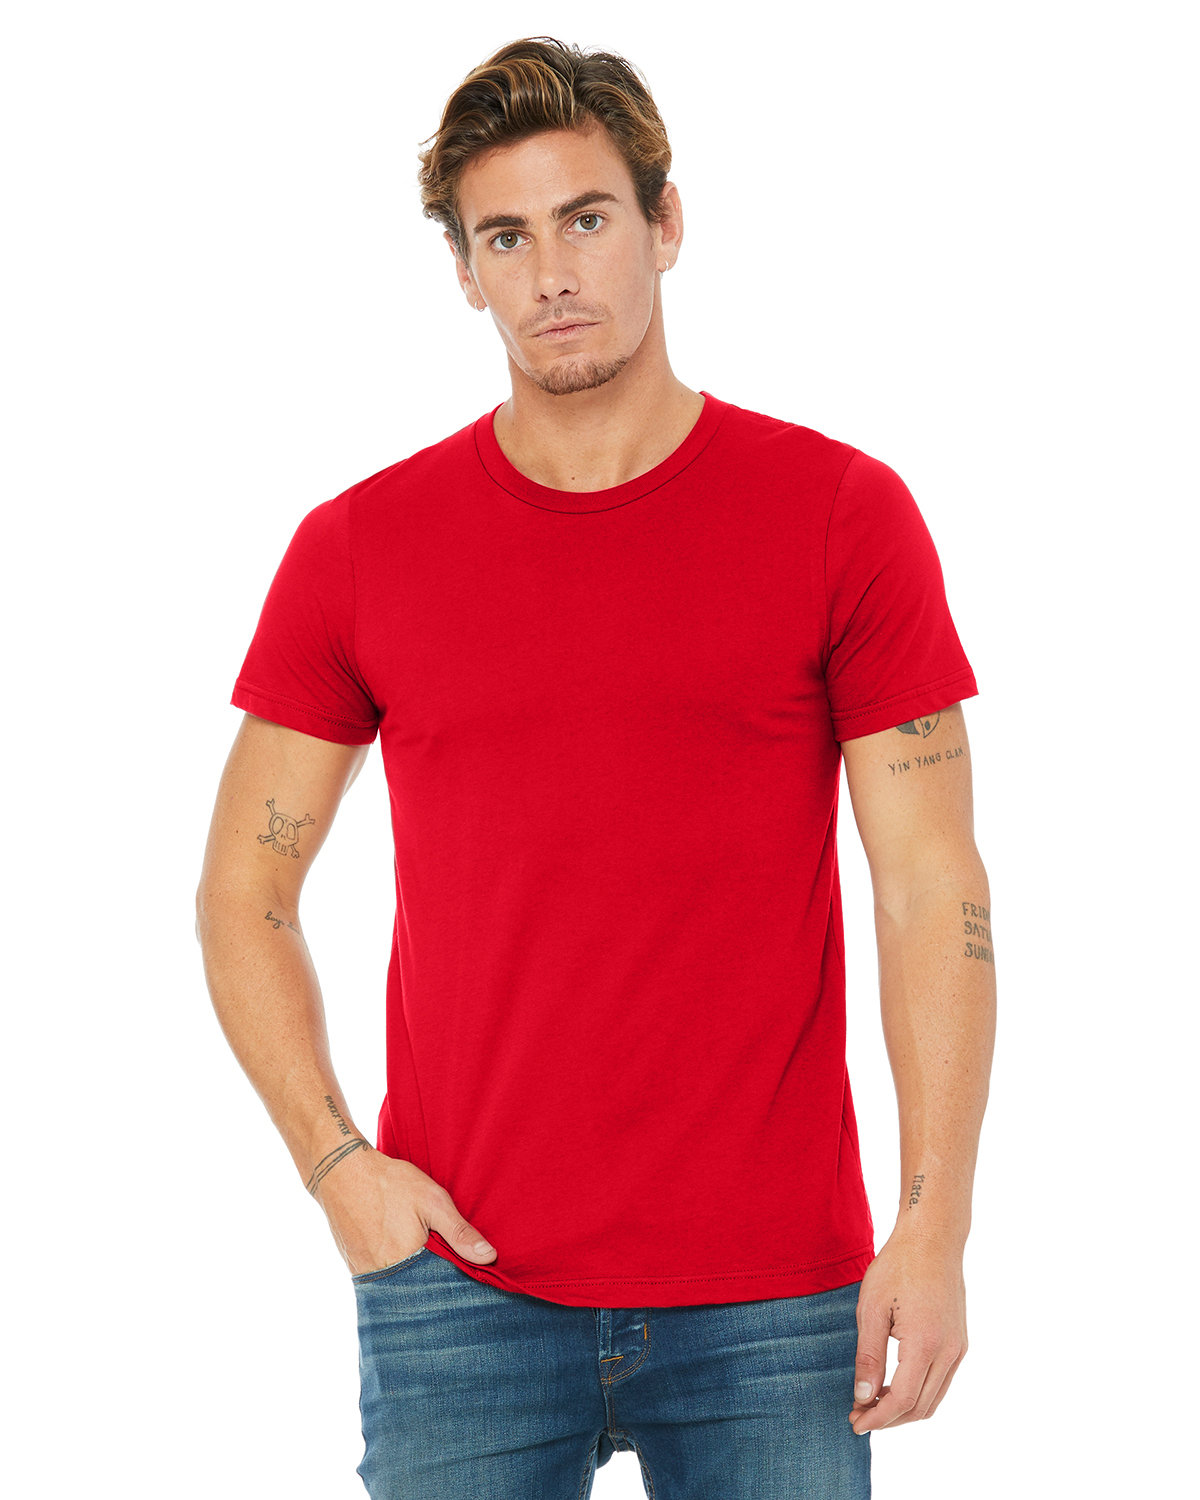 Bella + Canvas Unisex Jersey T-Shirt RED 